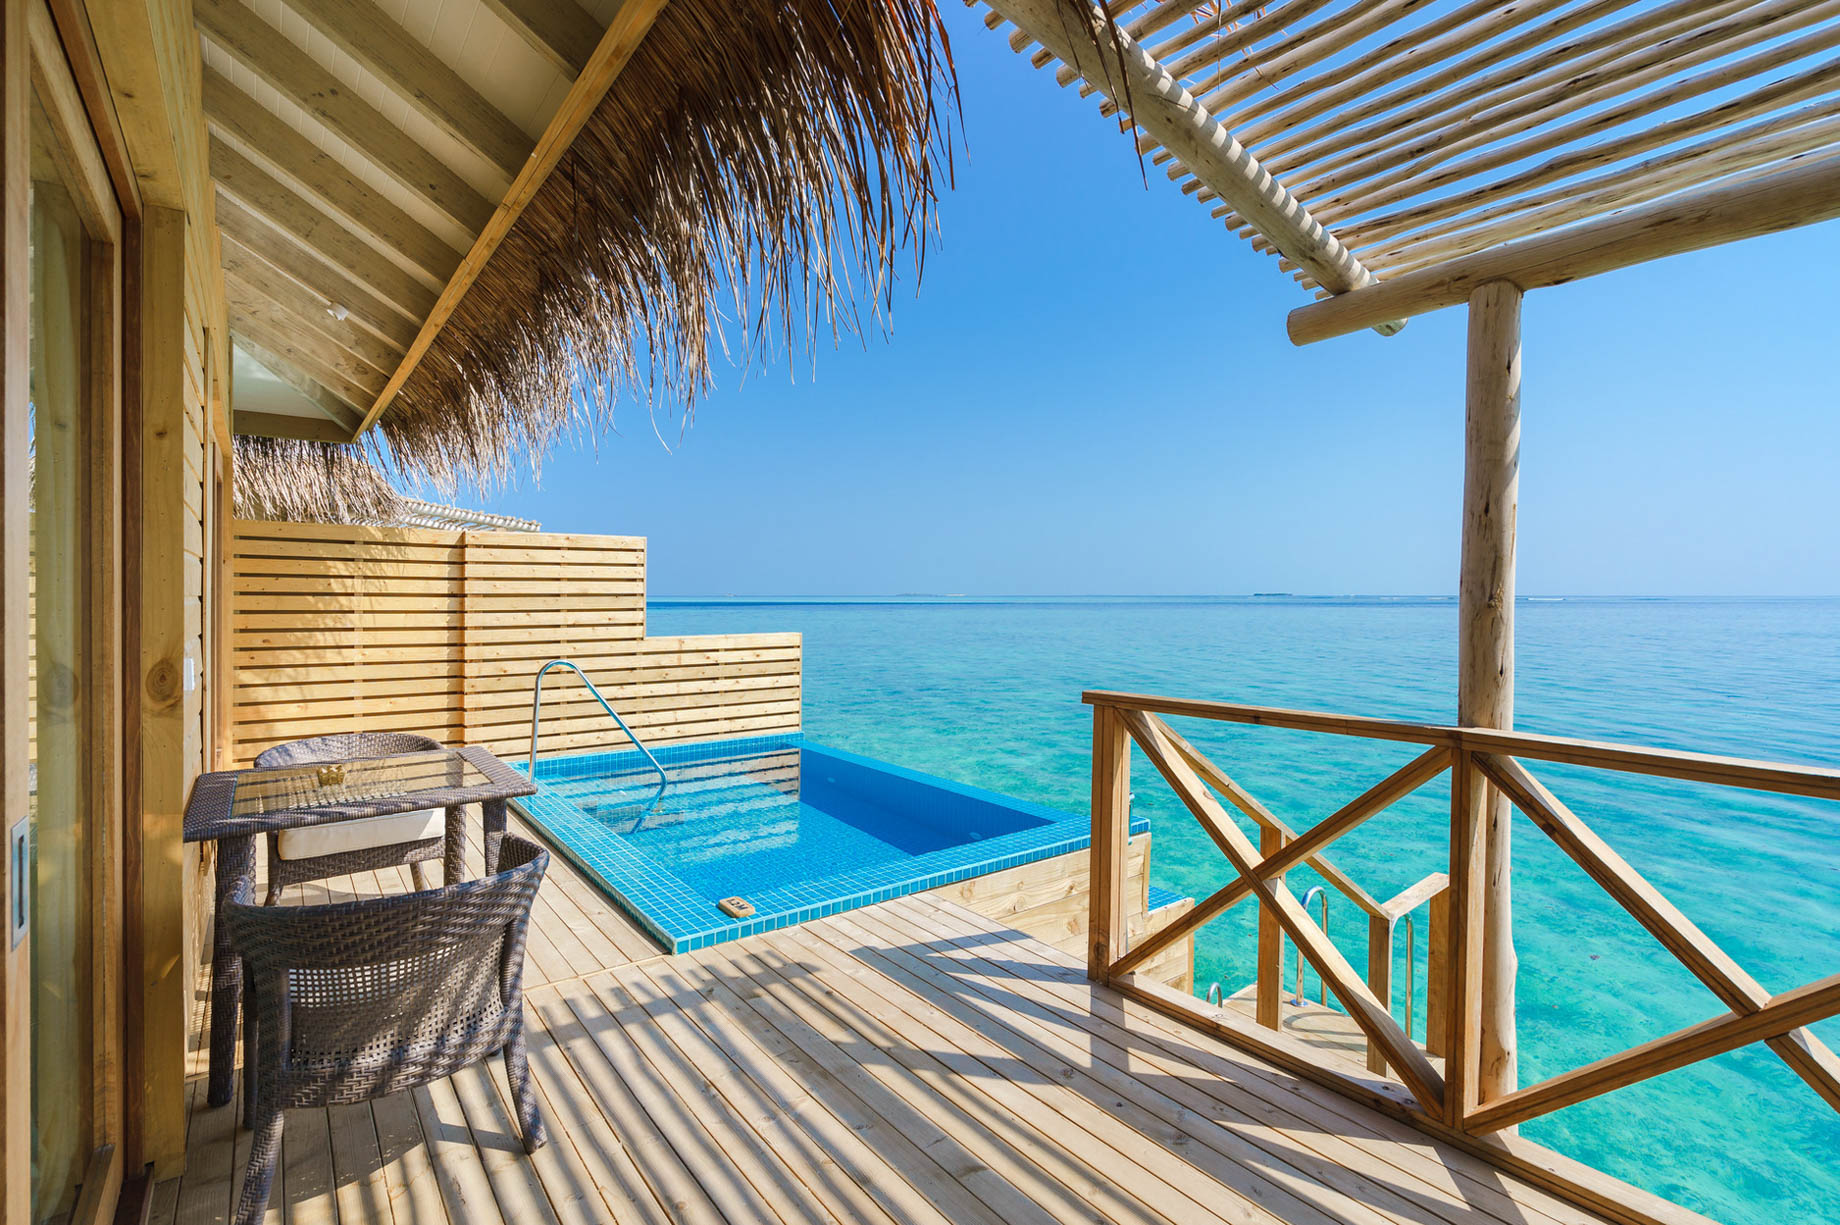 You & Me Maldives Resort – Uthurumaafaru, Raa Atoll, Maldives – Aqua Suite with Pool View